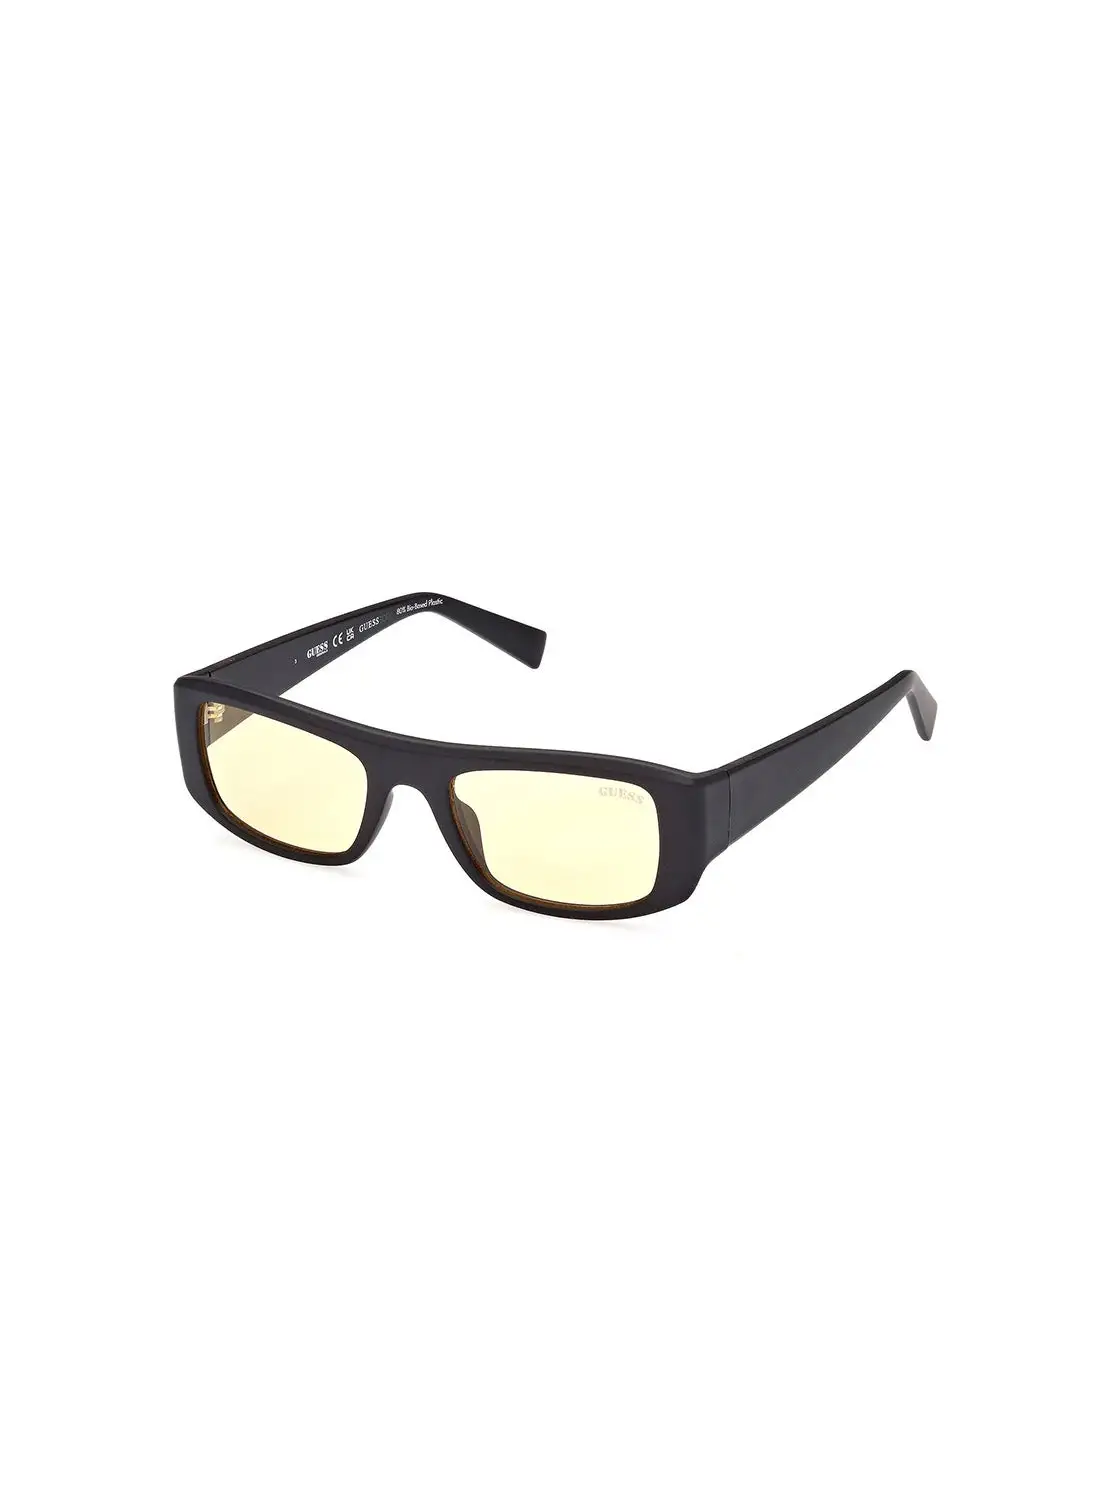 GUESS Unisex UV Protection Rectangular Sunglasses - GU827802E51 - Lens Size: 51 Mm